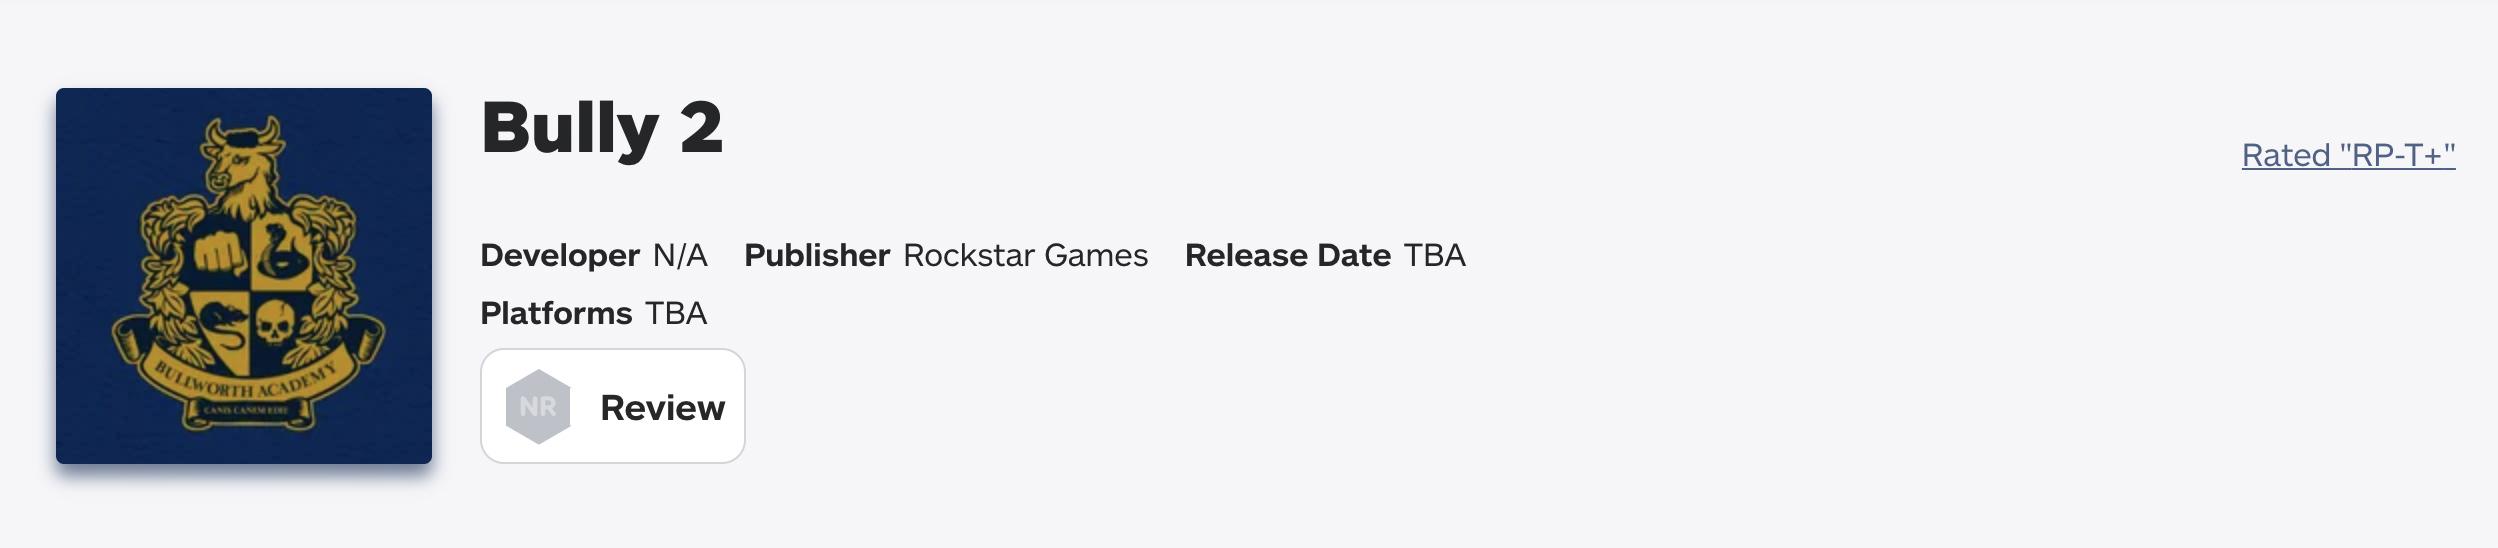 Bully 2 potentially teased in GTA Online Casino update - Dexerto